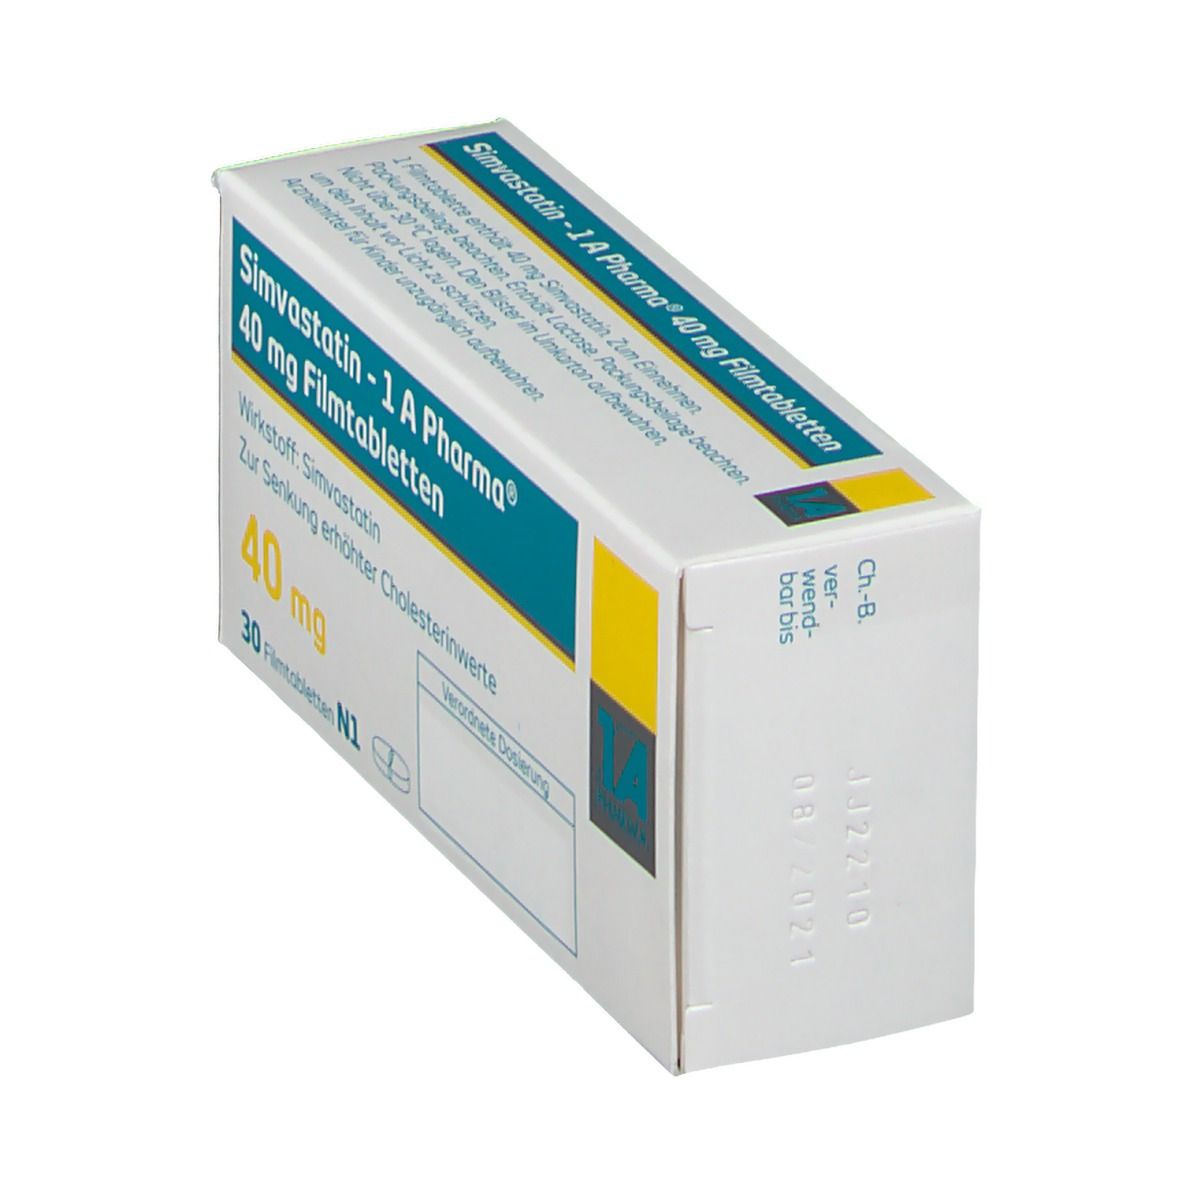 Simvastatin 1A Pharma® 40Mg